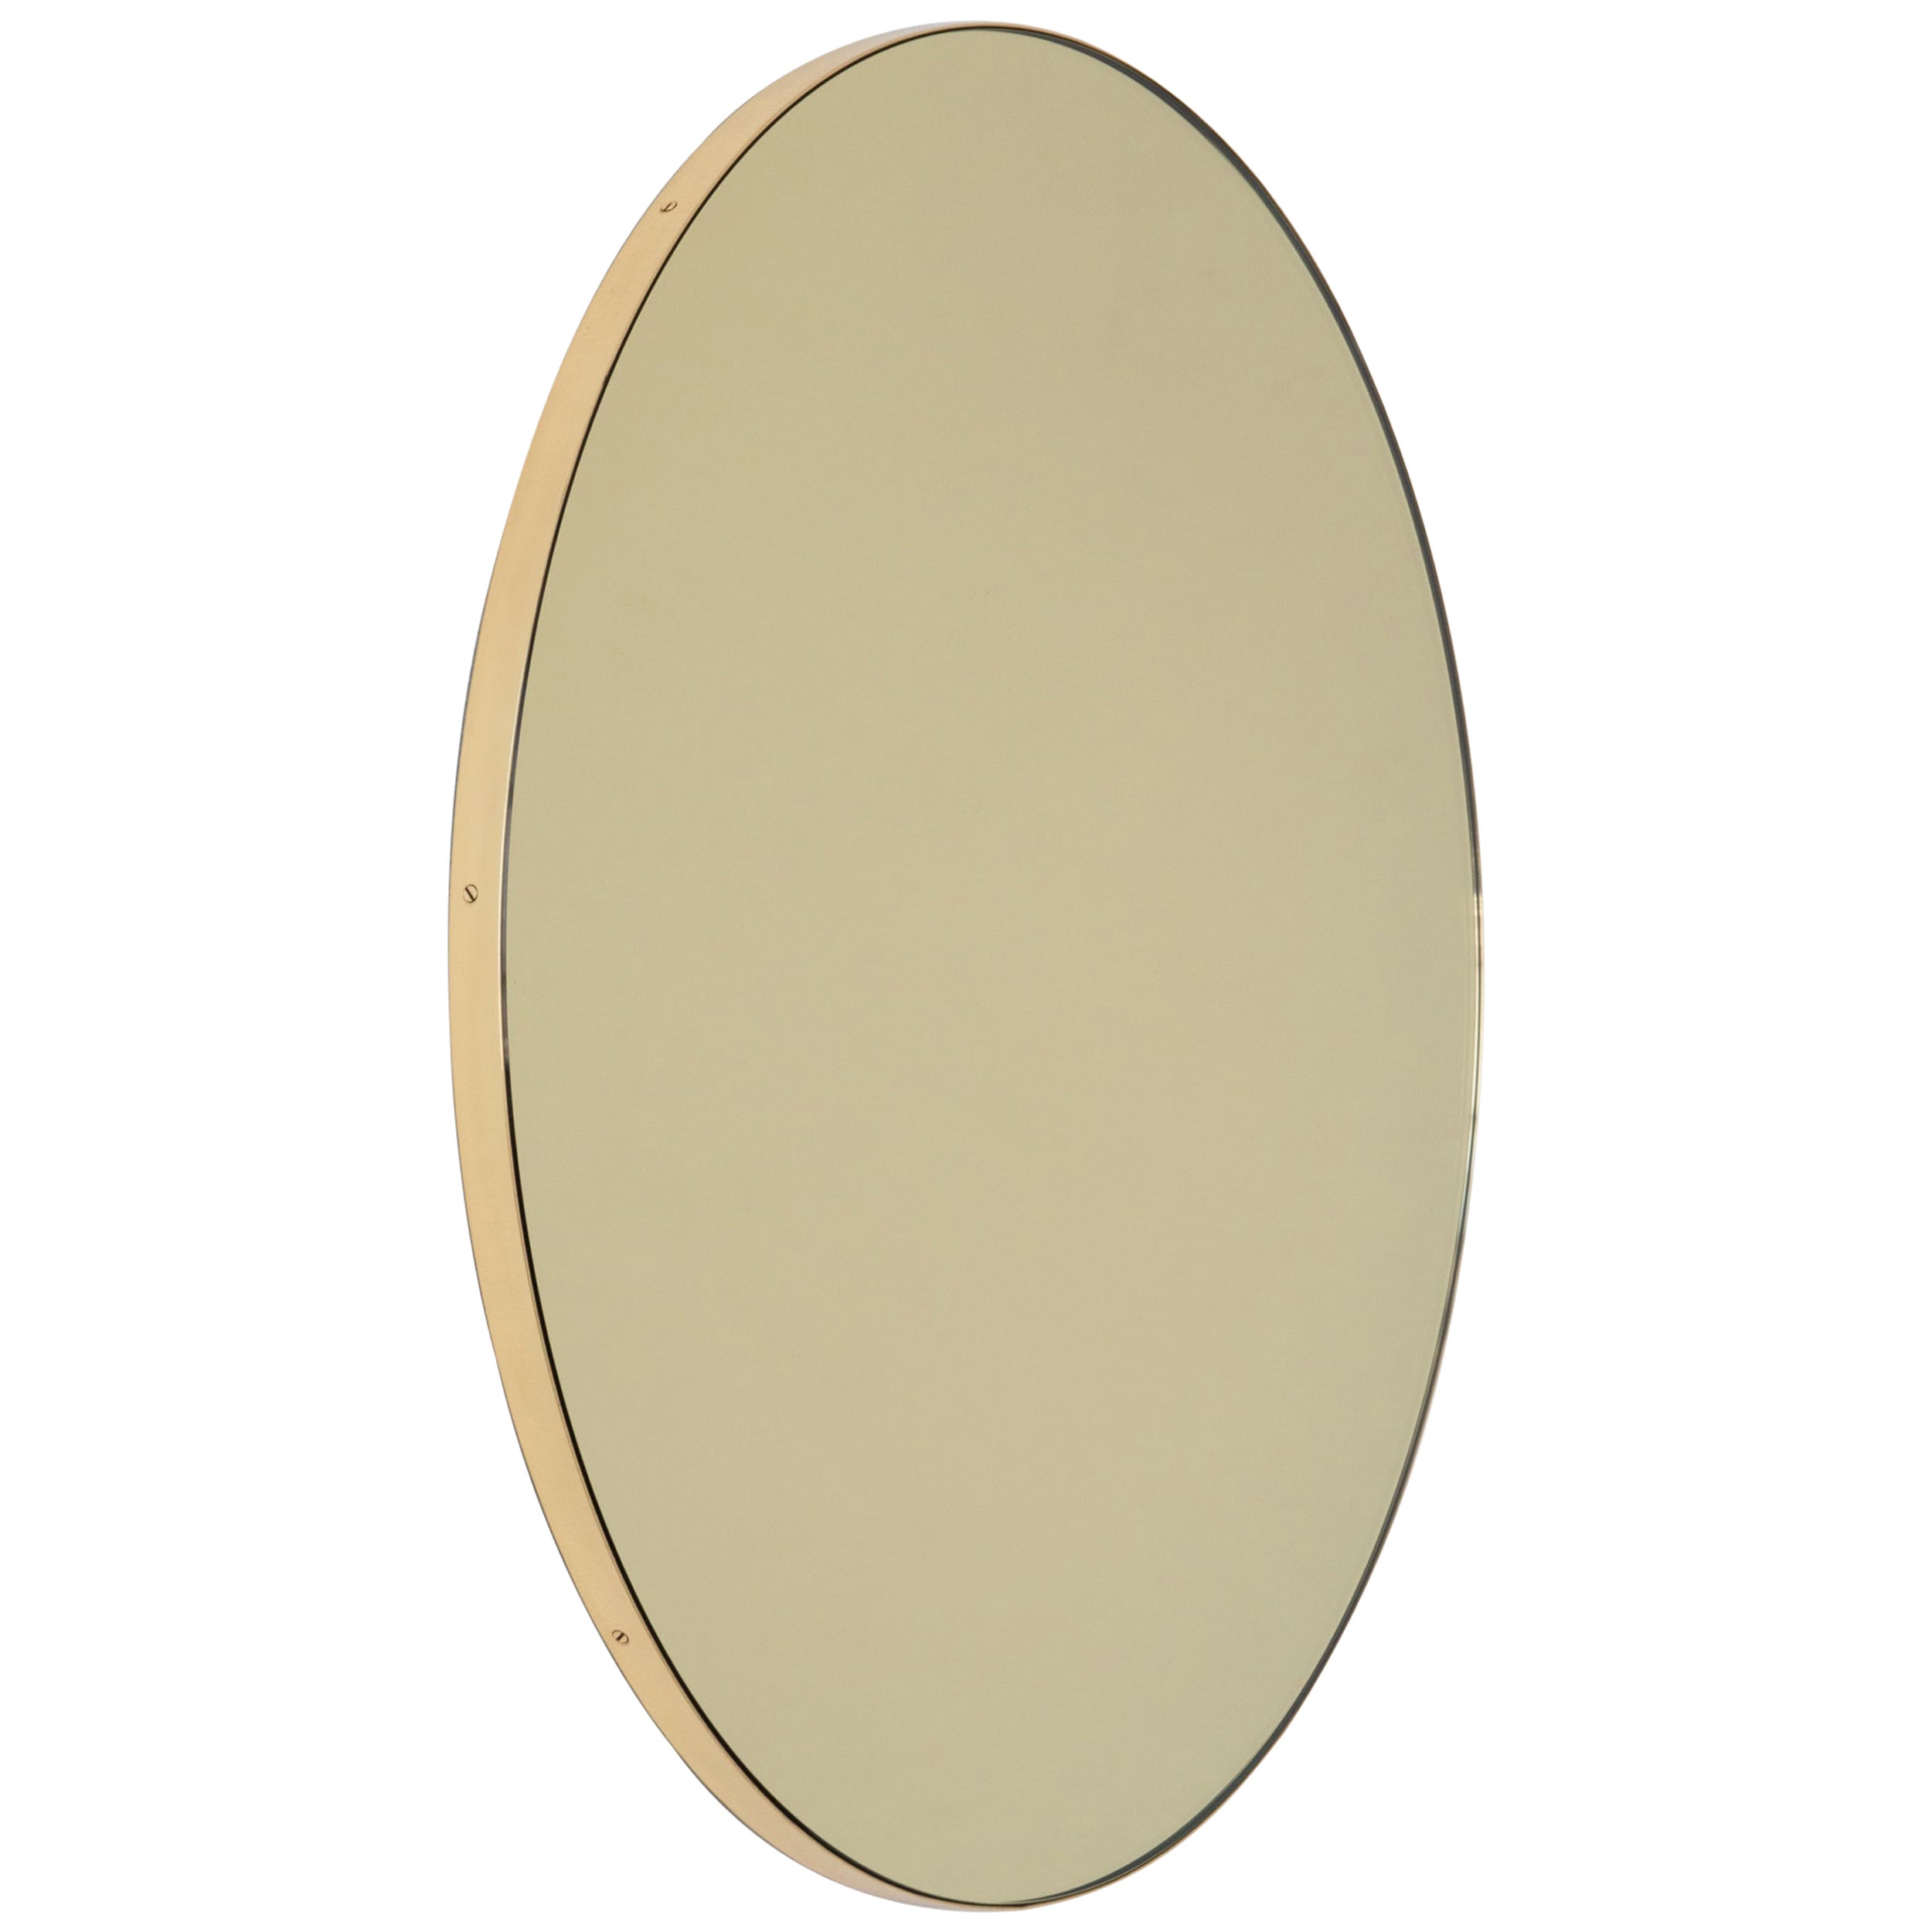 In Stock Orbis Gold Tinted Round Contemporary Mirror, Brass Frame, Medium